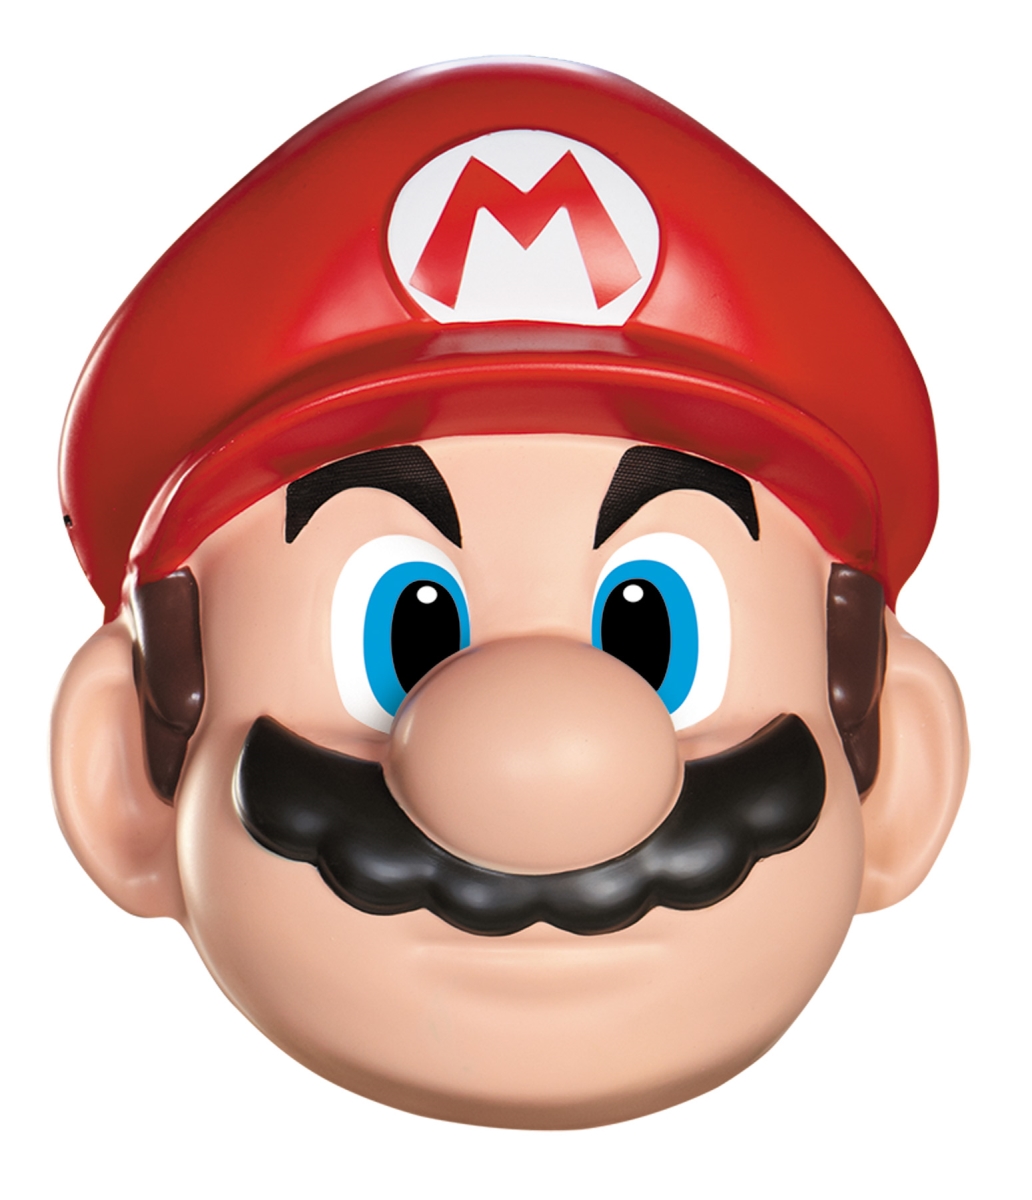 Picture of Morris Costumes DG73812 Mario Adult Mask